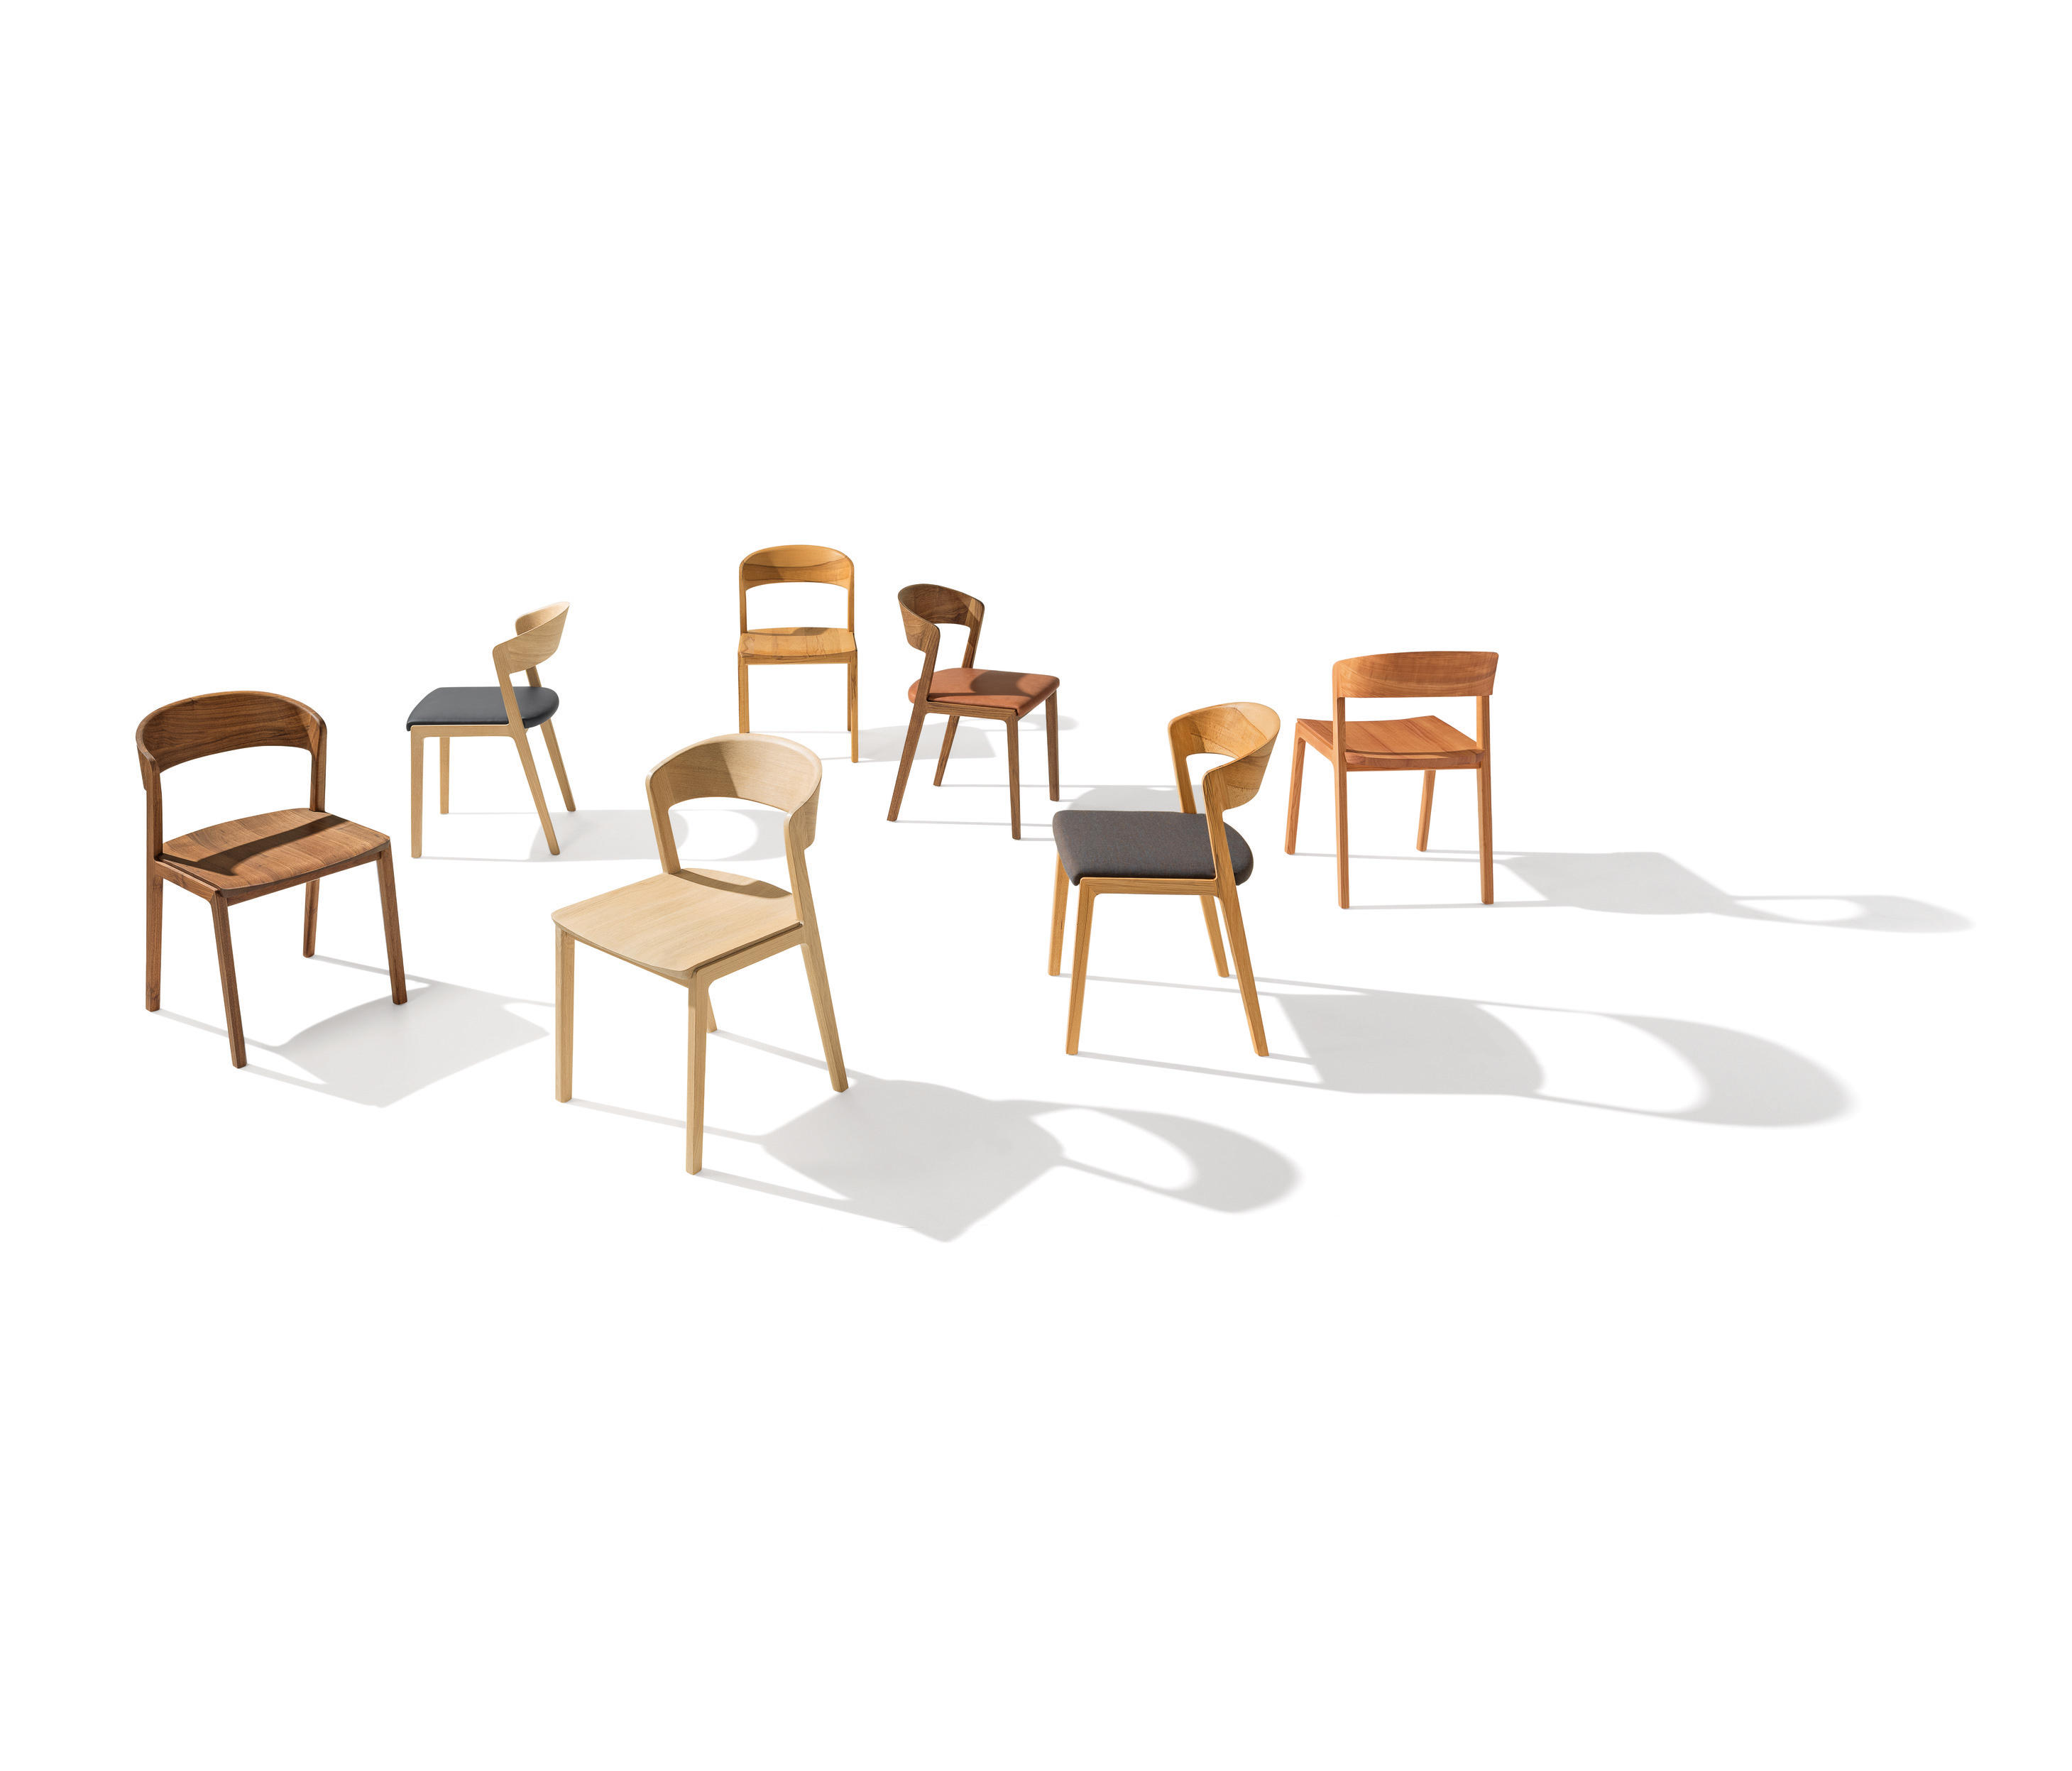 Mylon Chairs by TEAM 7